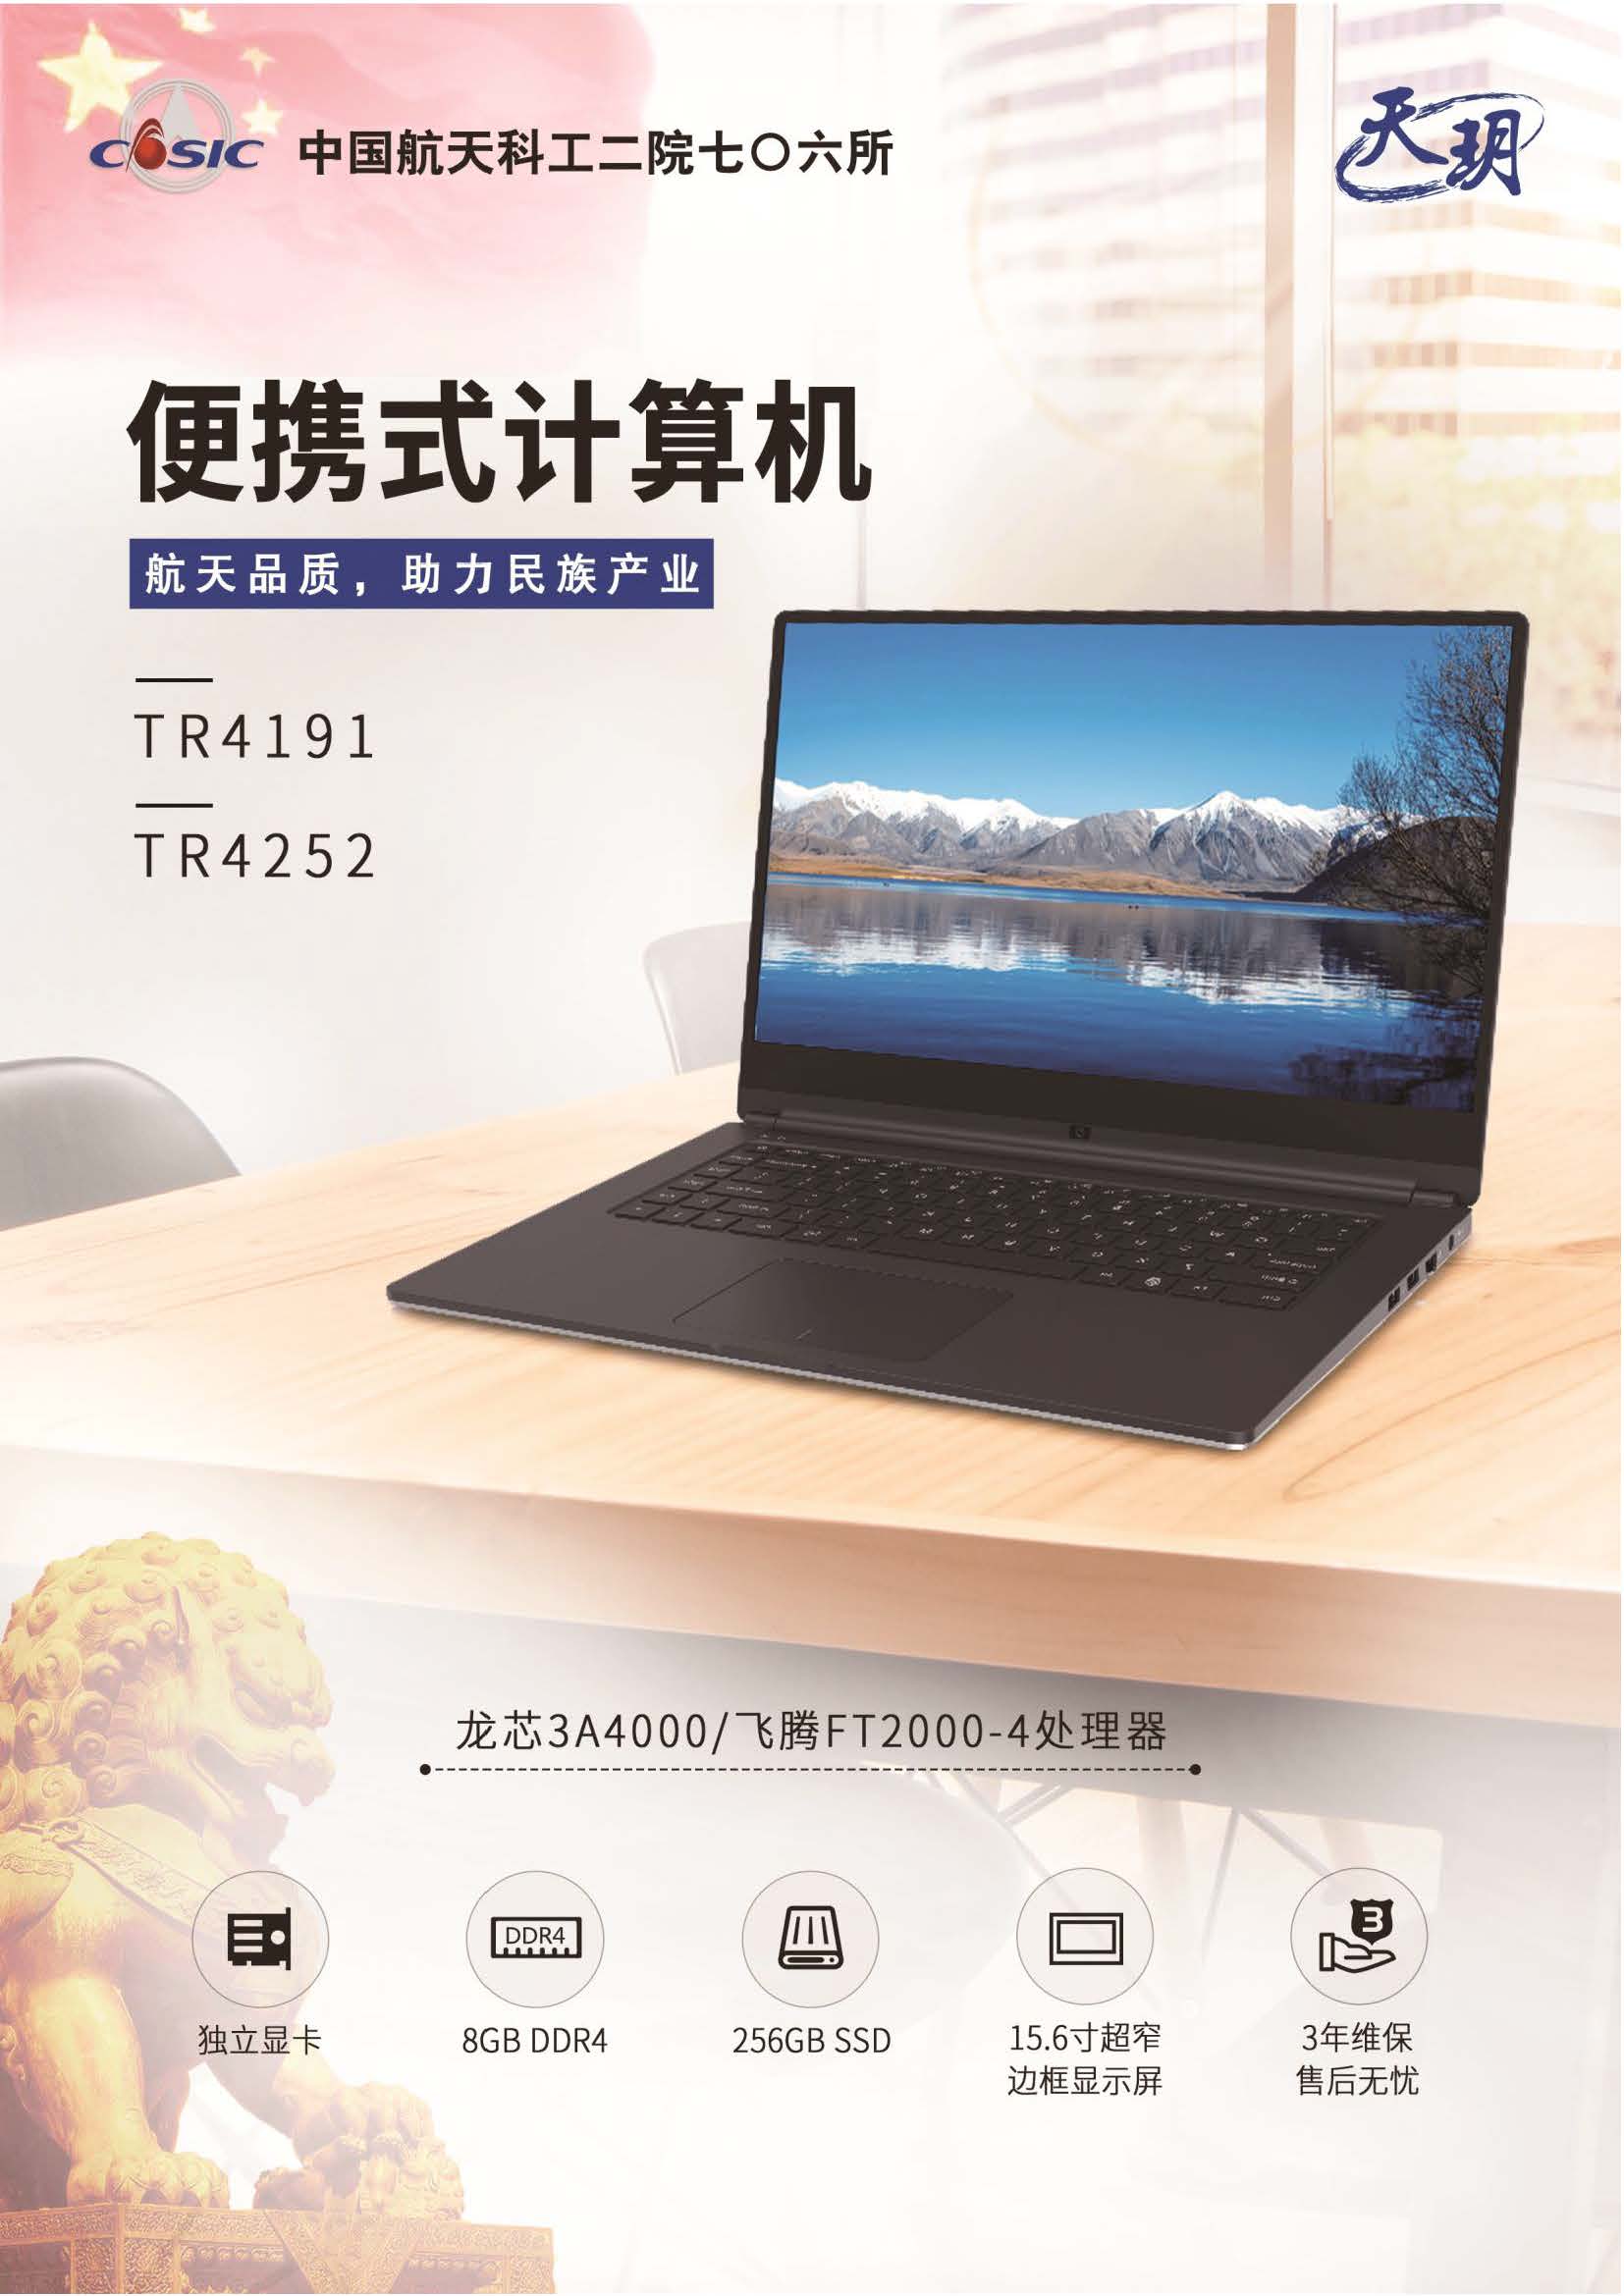 天玥 TR4252 15.6英寸笔记本电脑(图4)